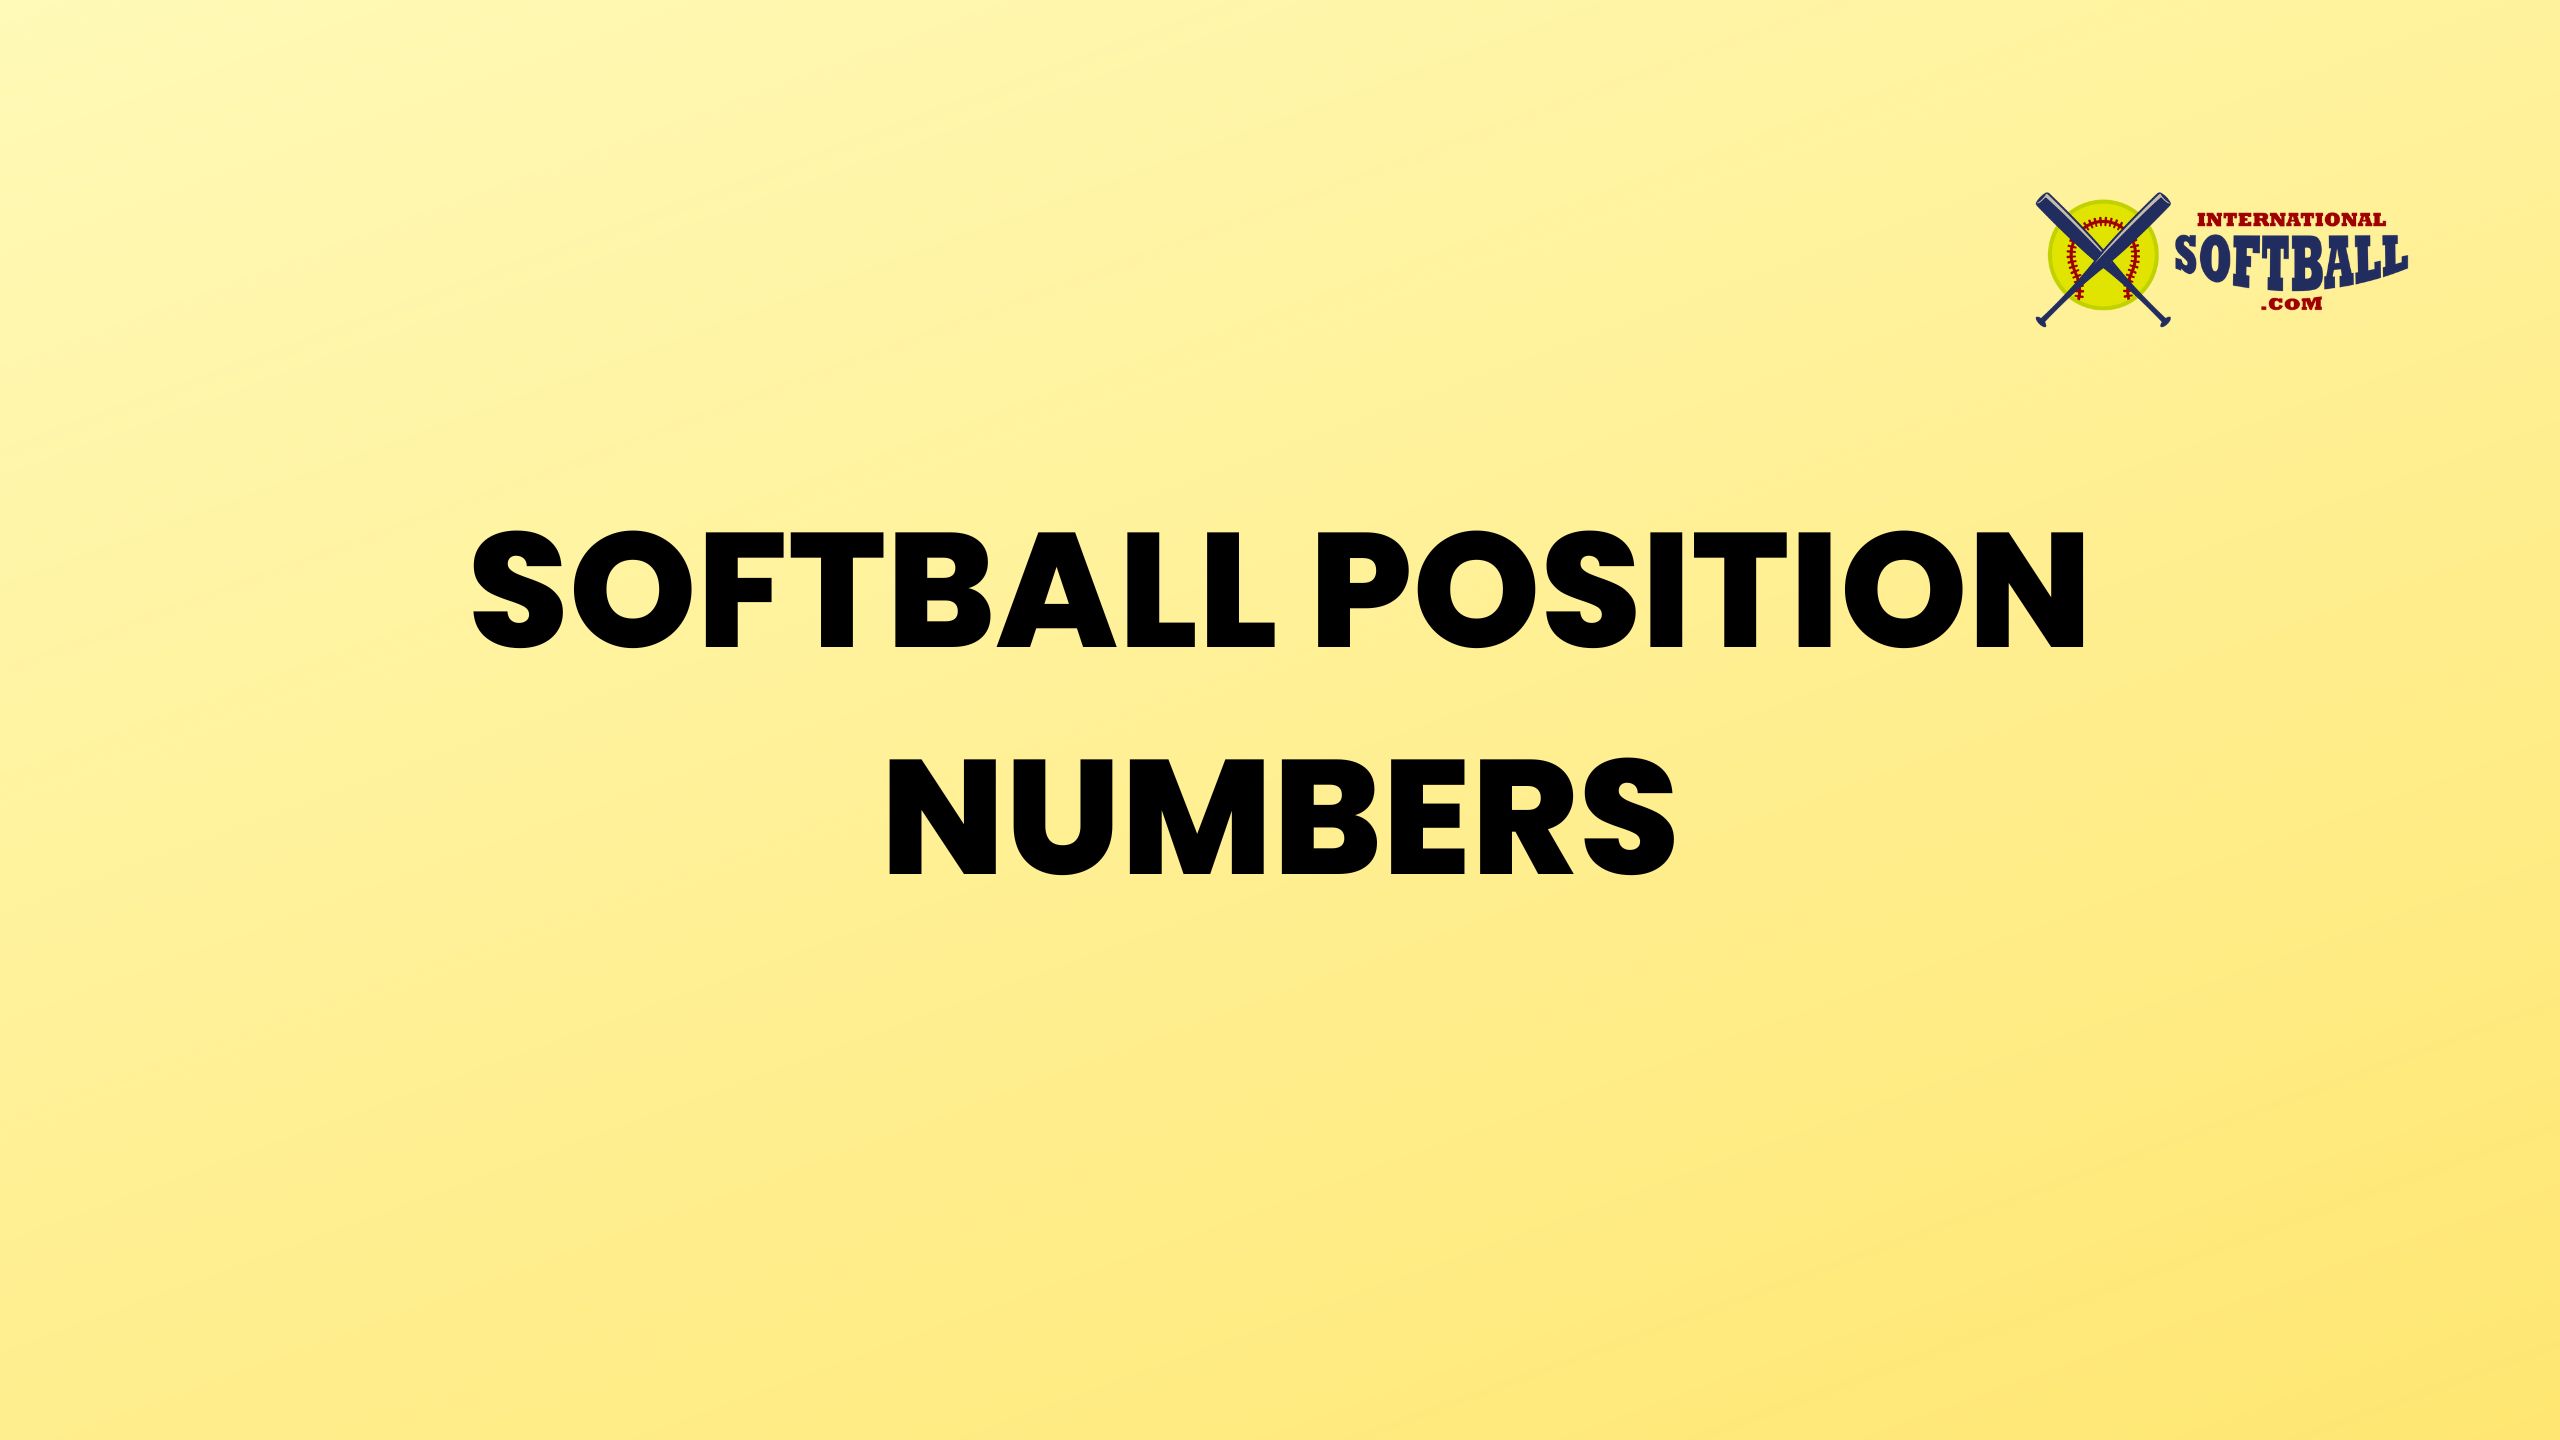 Softball Position Numbers - The Basics - International Softball